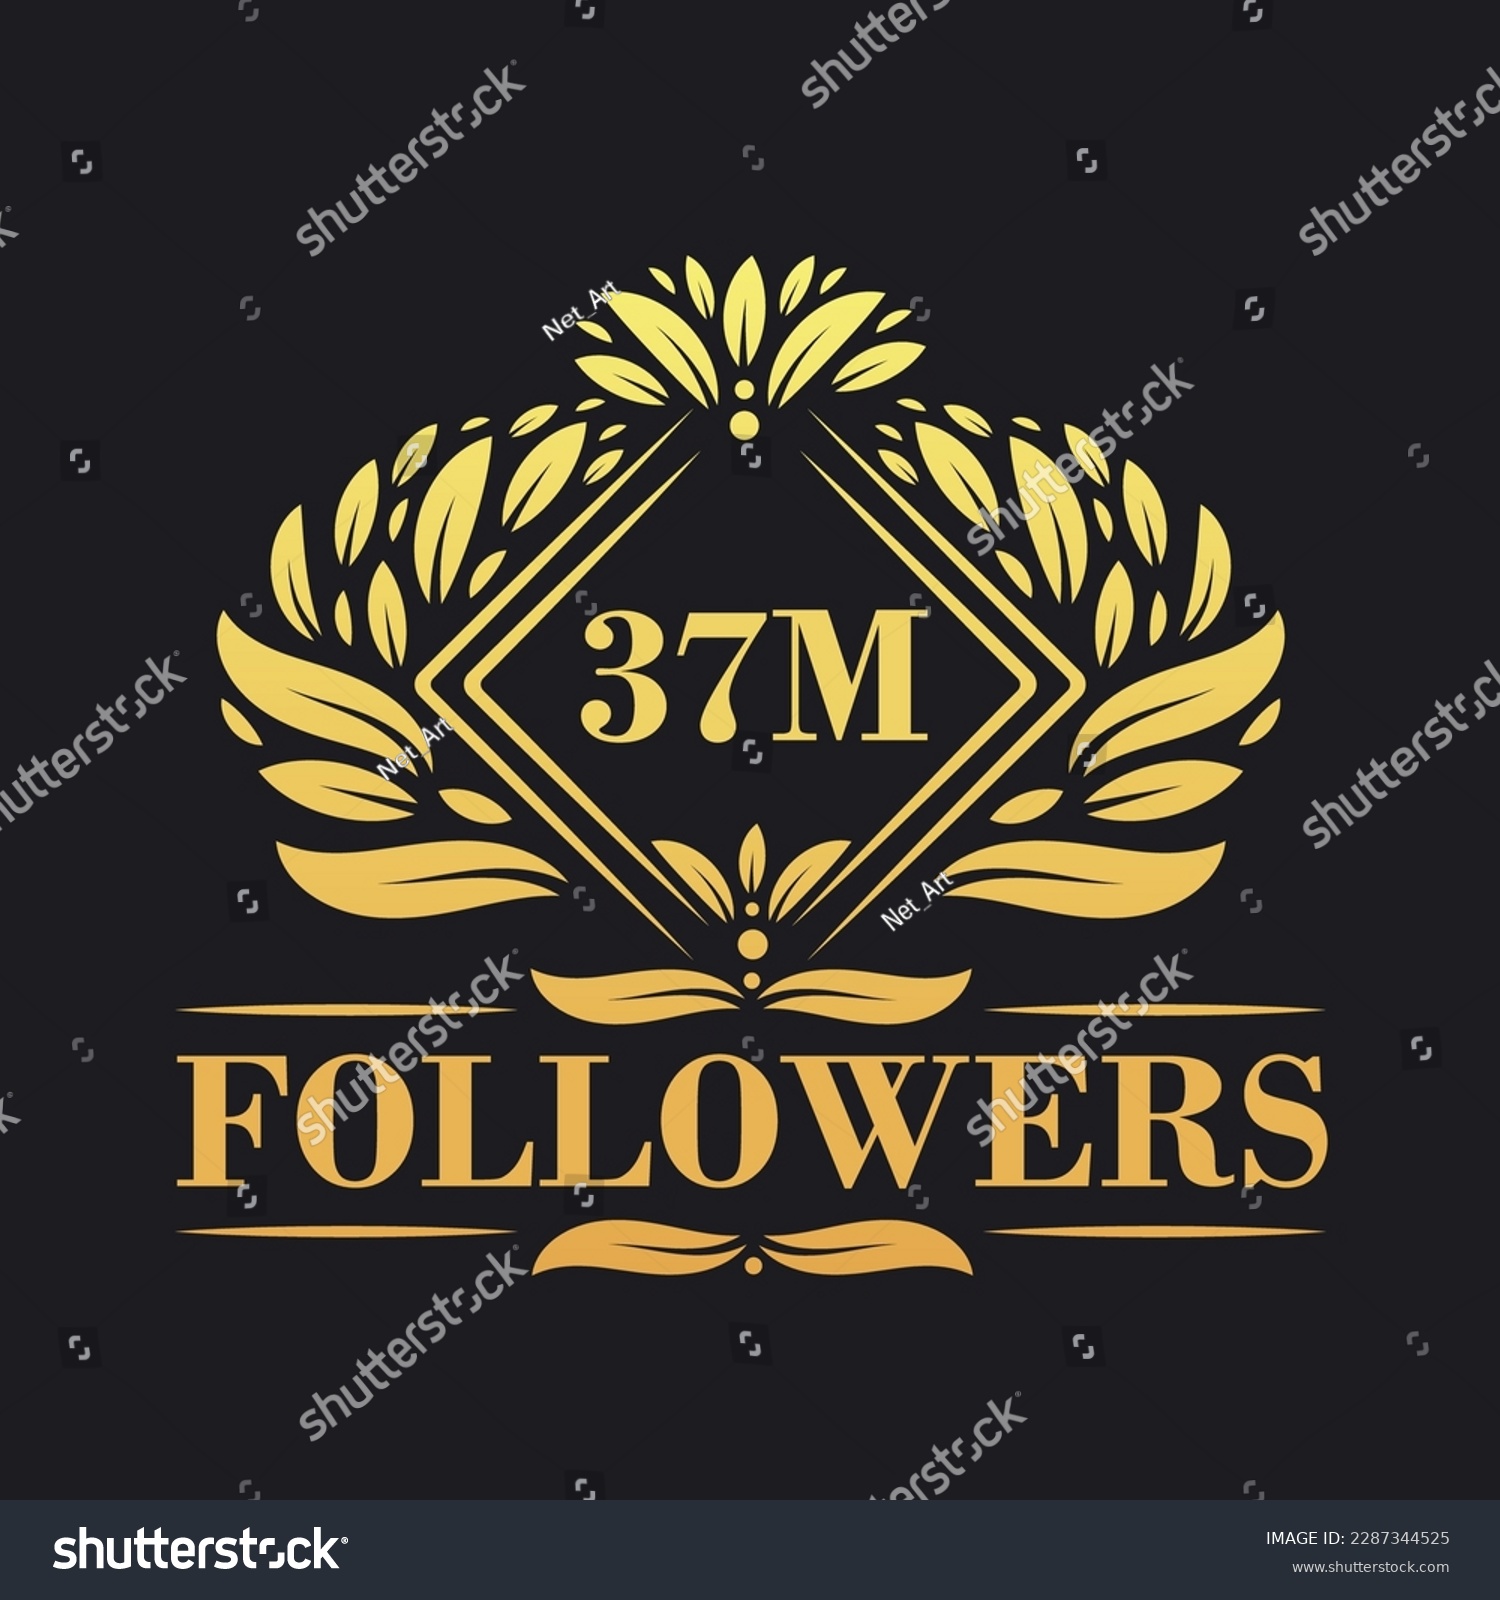 SVG of 37M Followers celebration design. Luxurious 37M Followers logo for social media followers svg